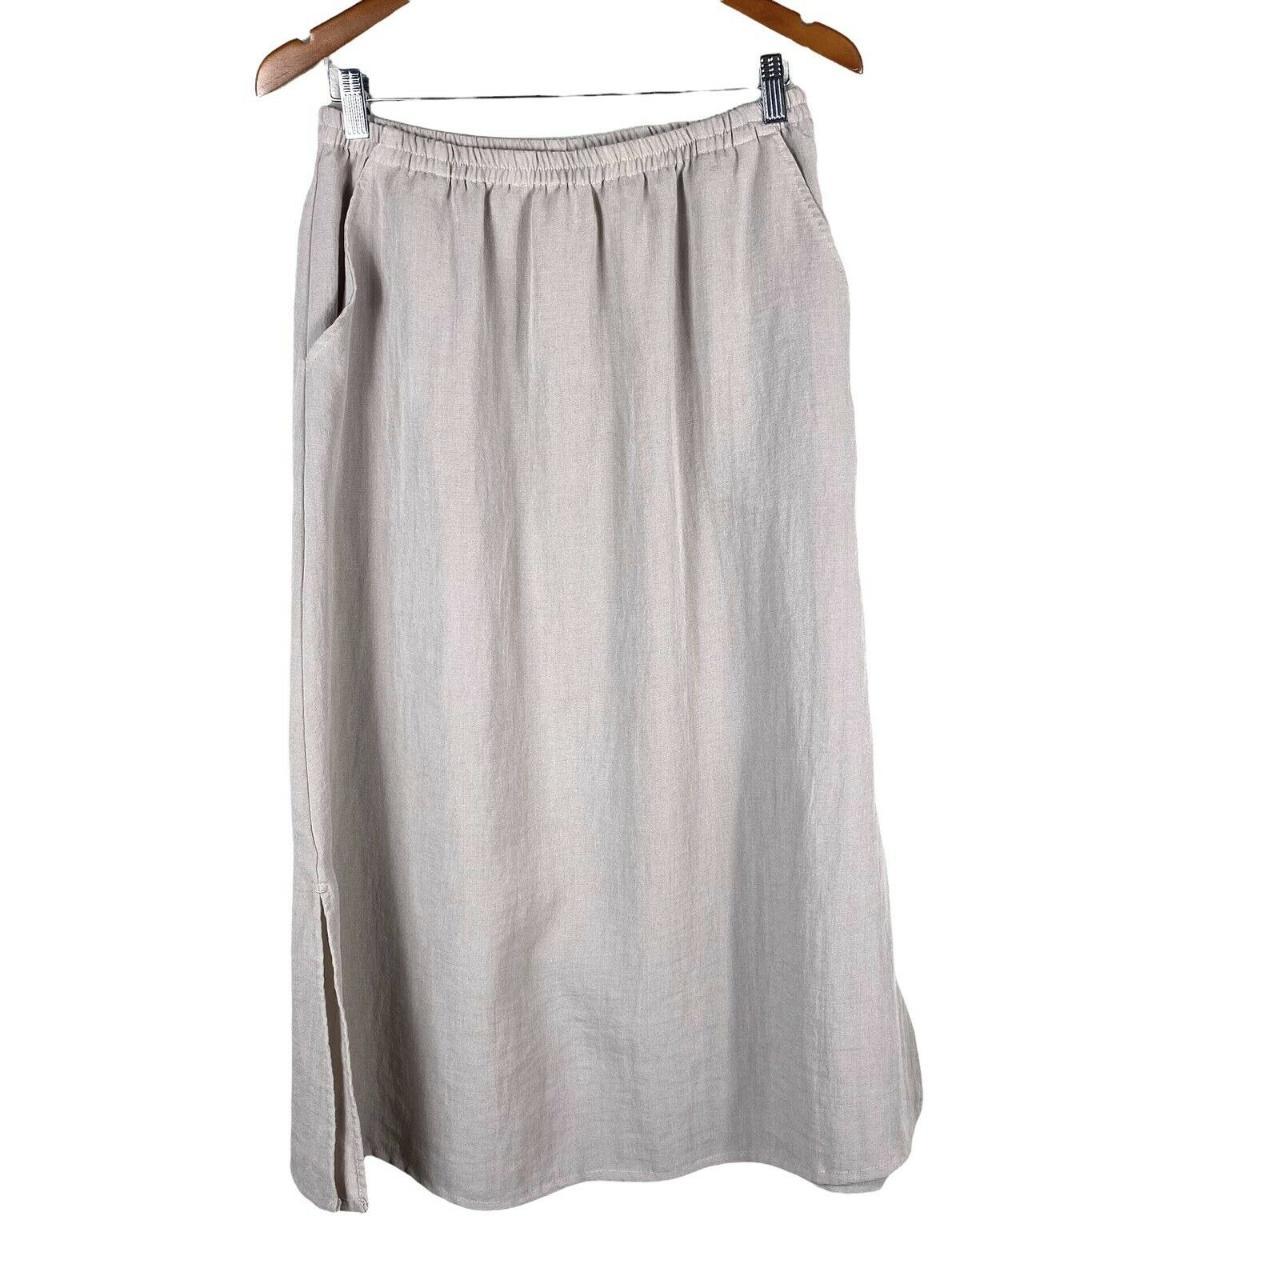 fridaze linen skirt MIDI Length With Pockets And... - Depop